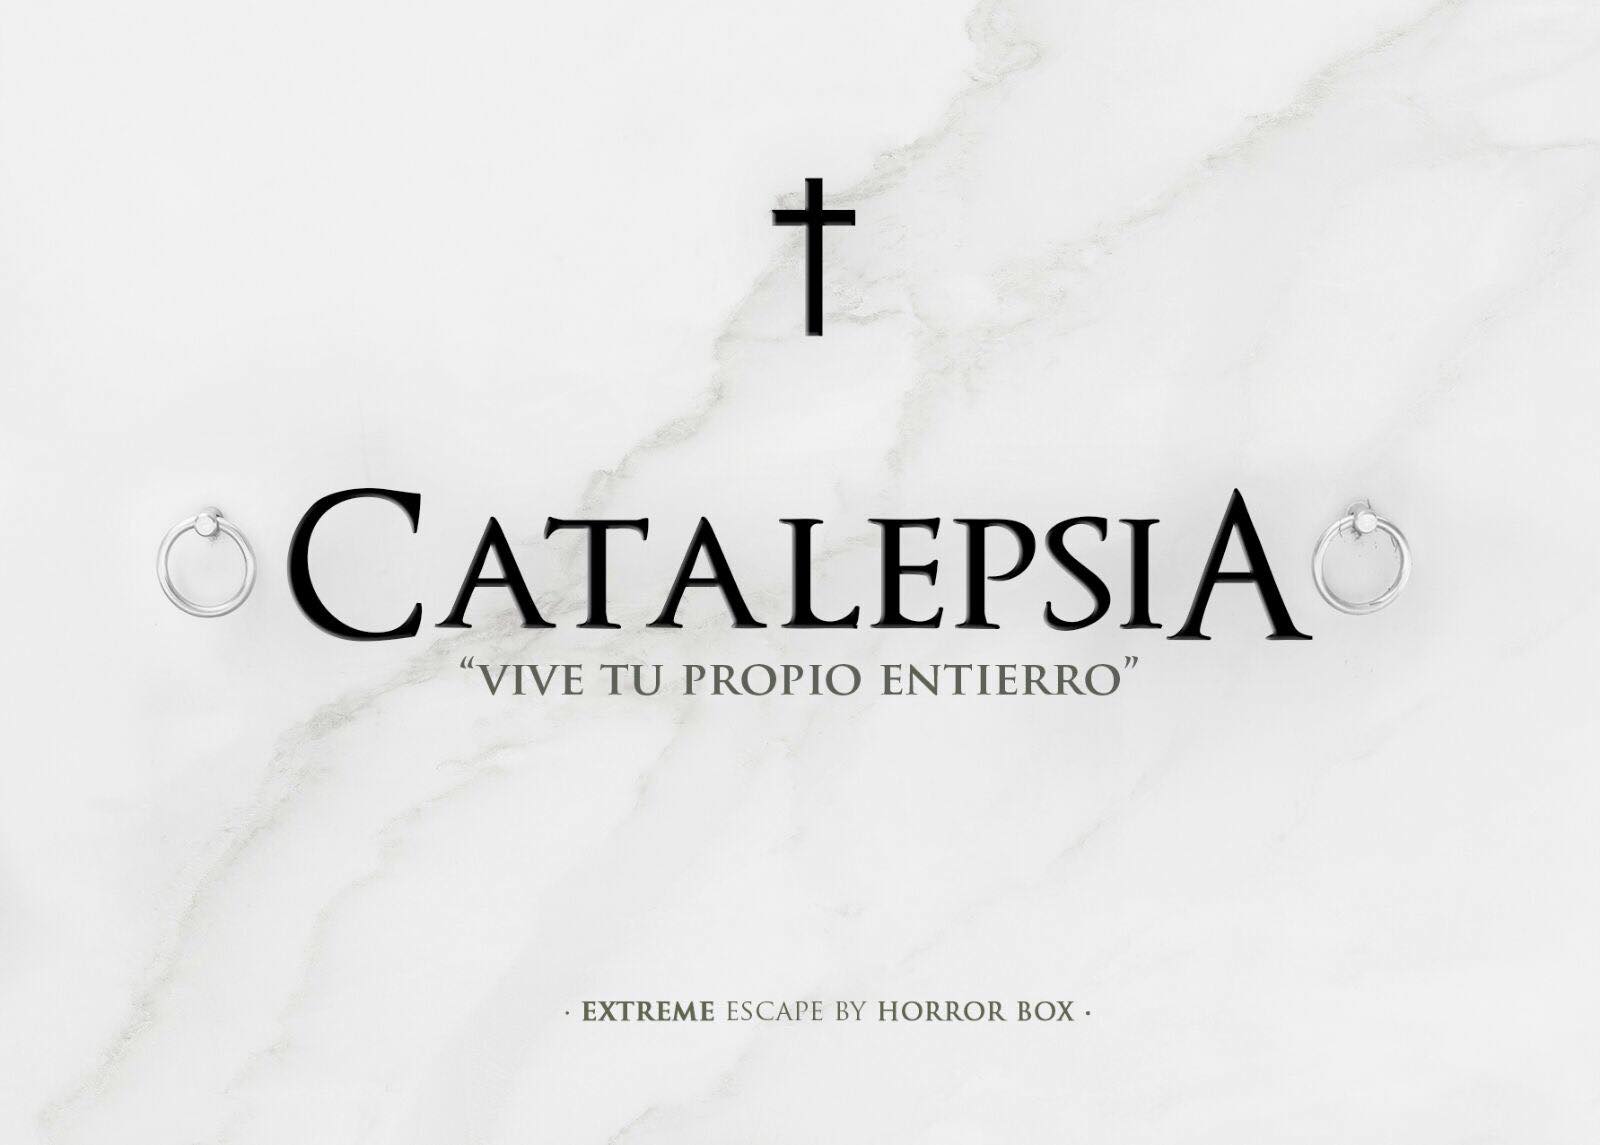 Catalepsia